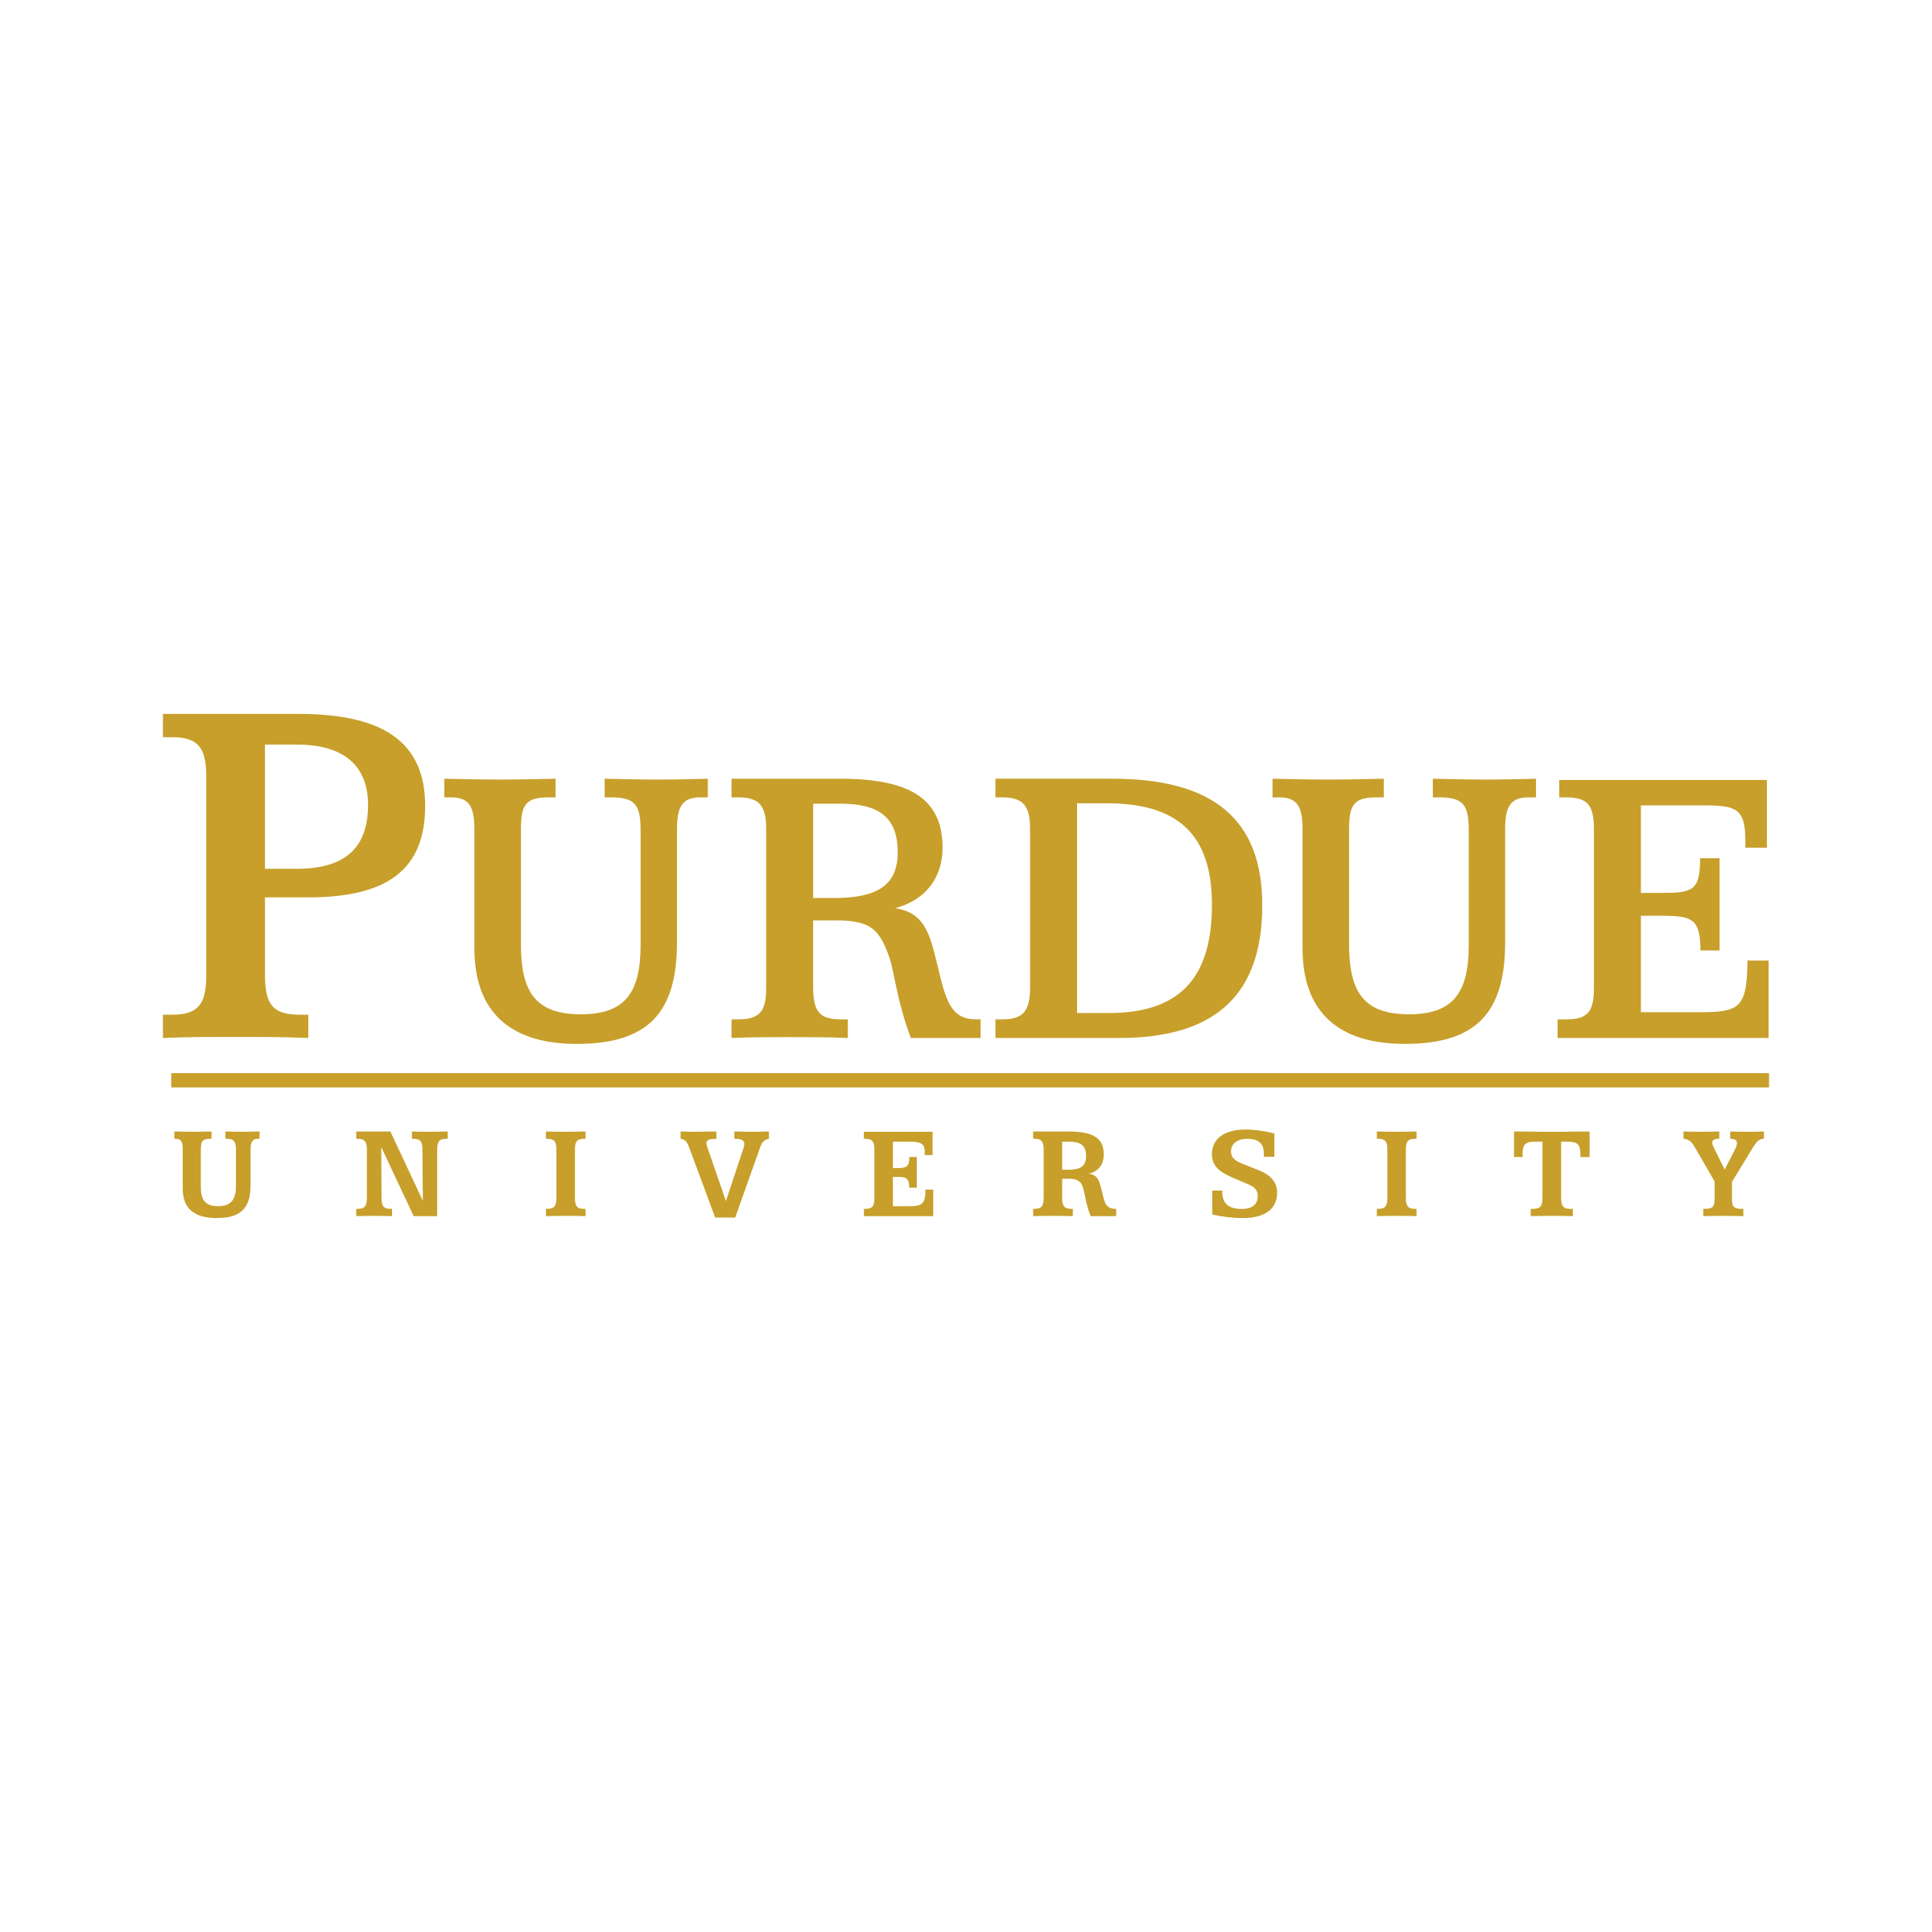 Purdue University Logo - Purdue University Logo PNG Transparent & SVG Vector - Freebie Supply